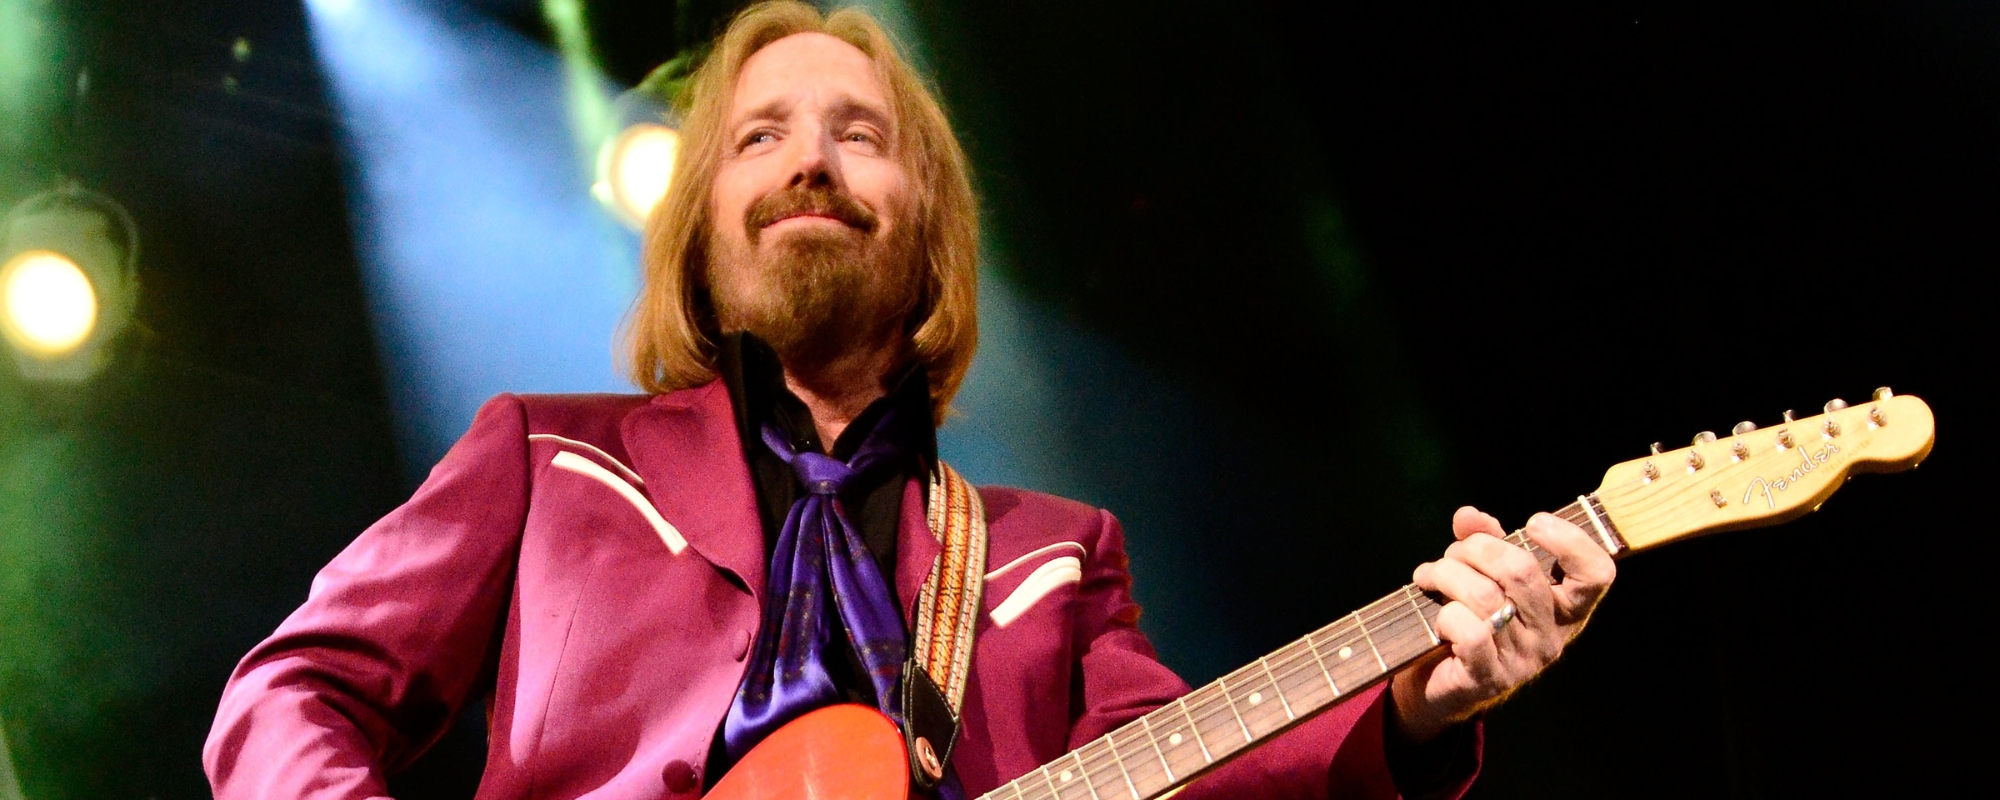 Tom Petty Tribute Album Will Feature Dolly Parton, Wynonna Judd, Chris Stapleton, and More Stars